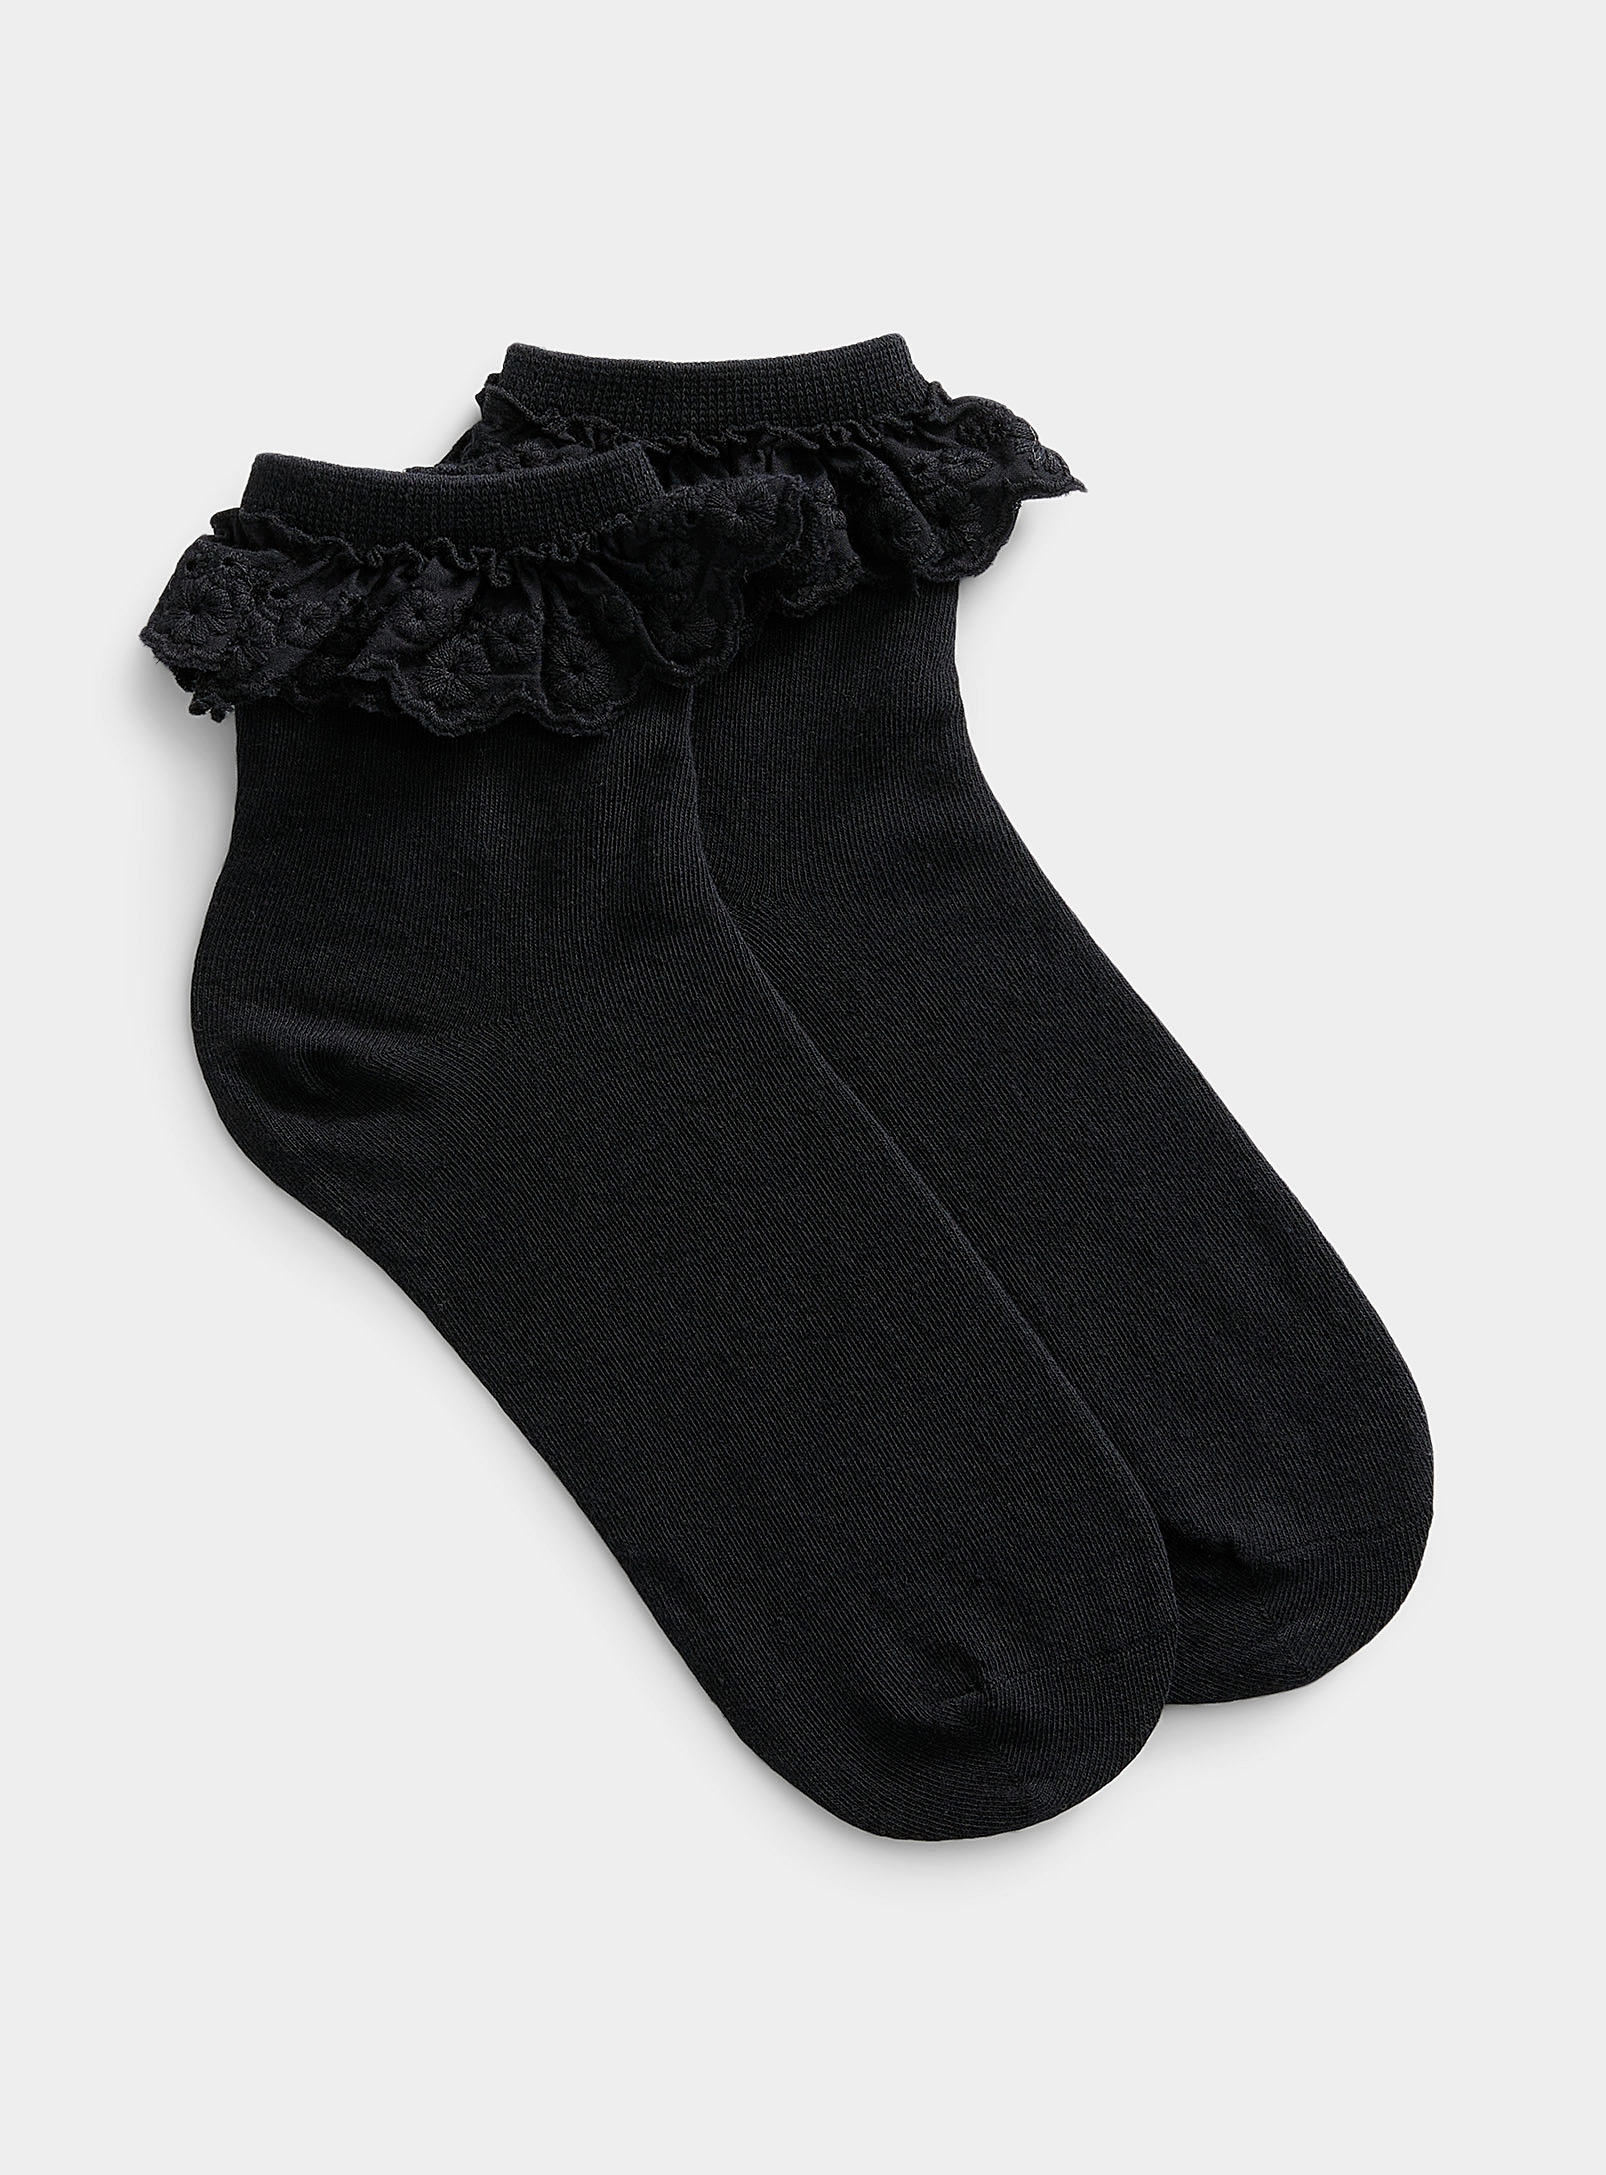 Simons - Women's Broderie anglaise ankle socks